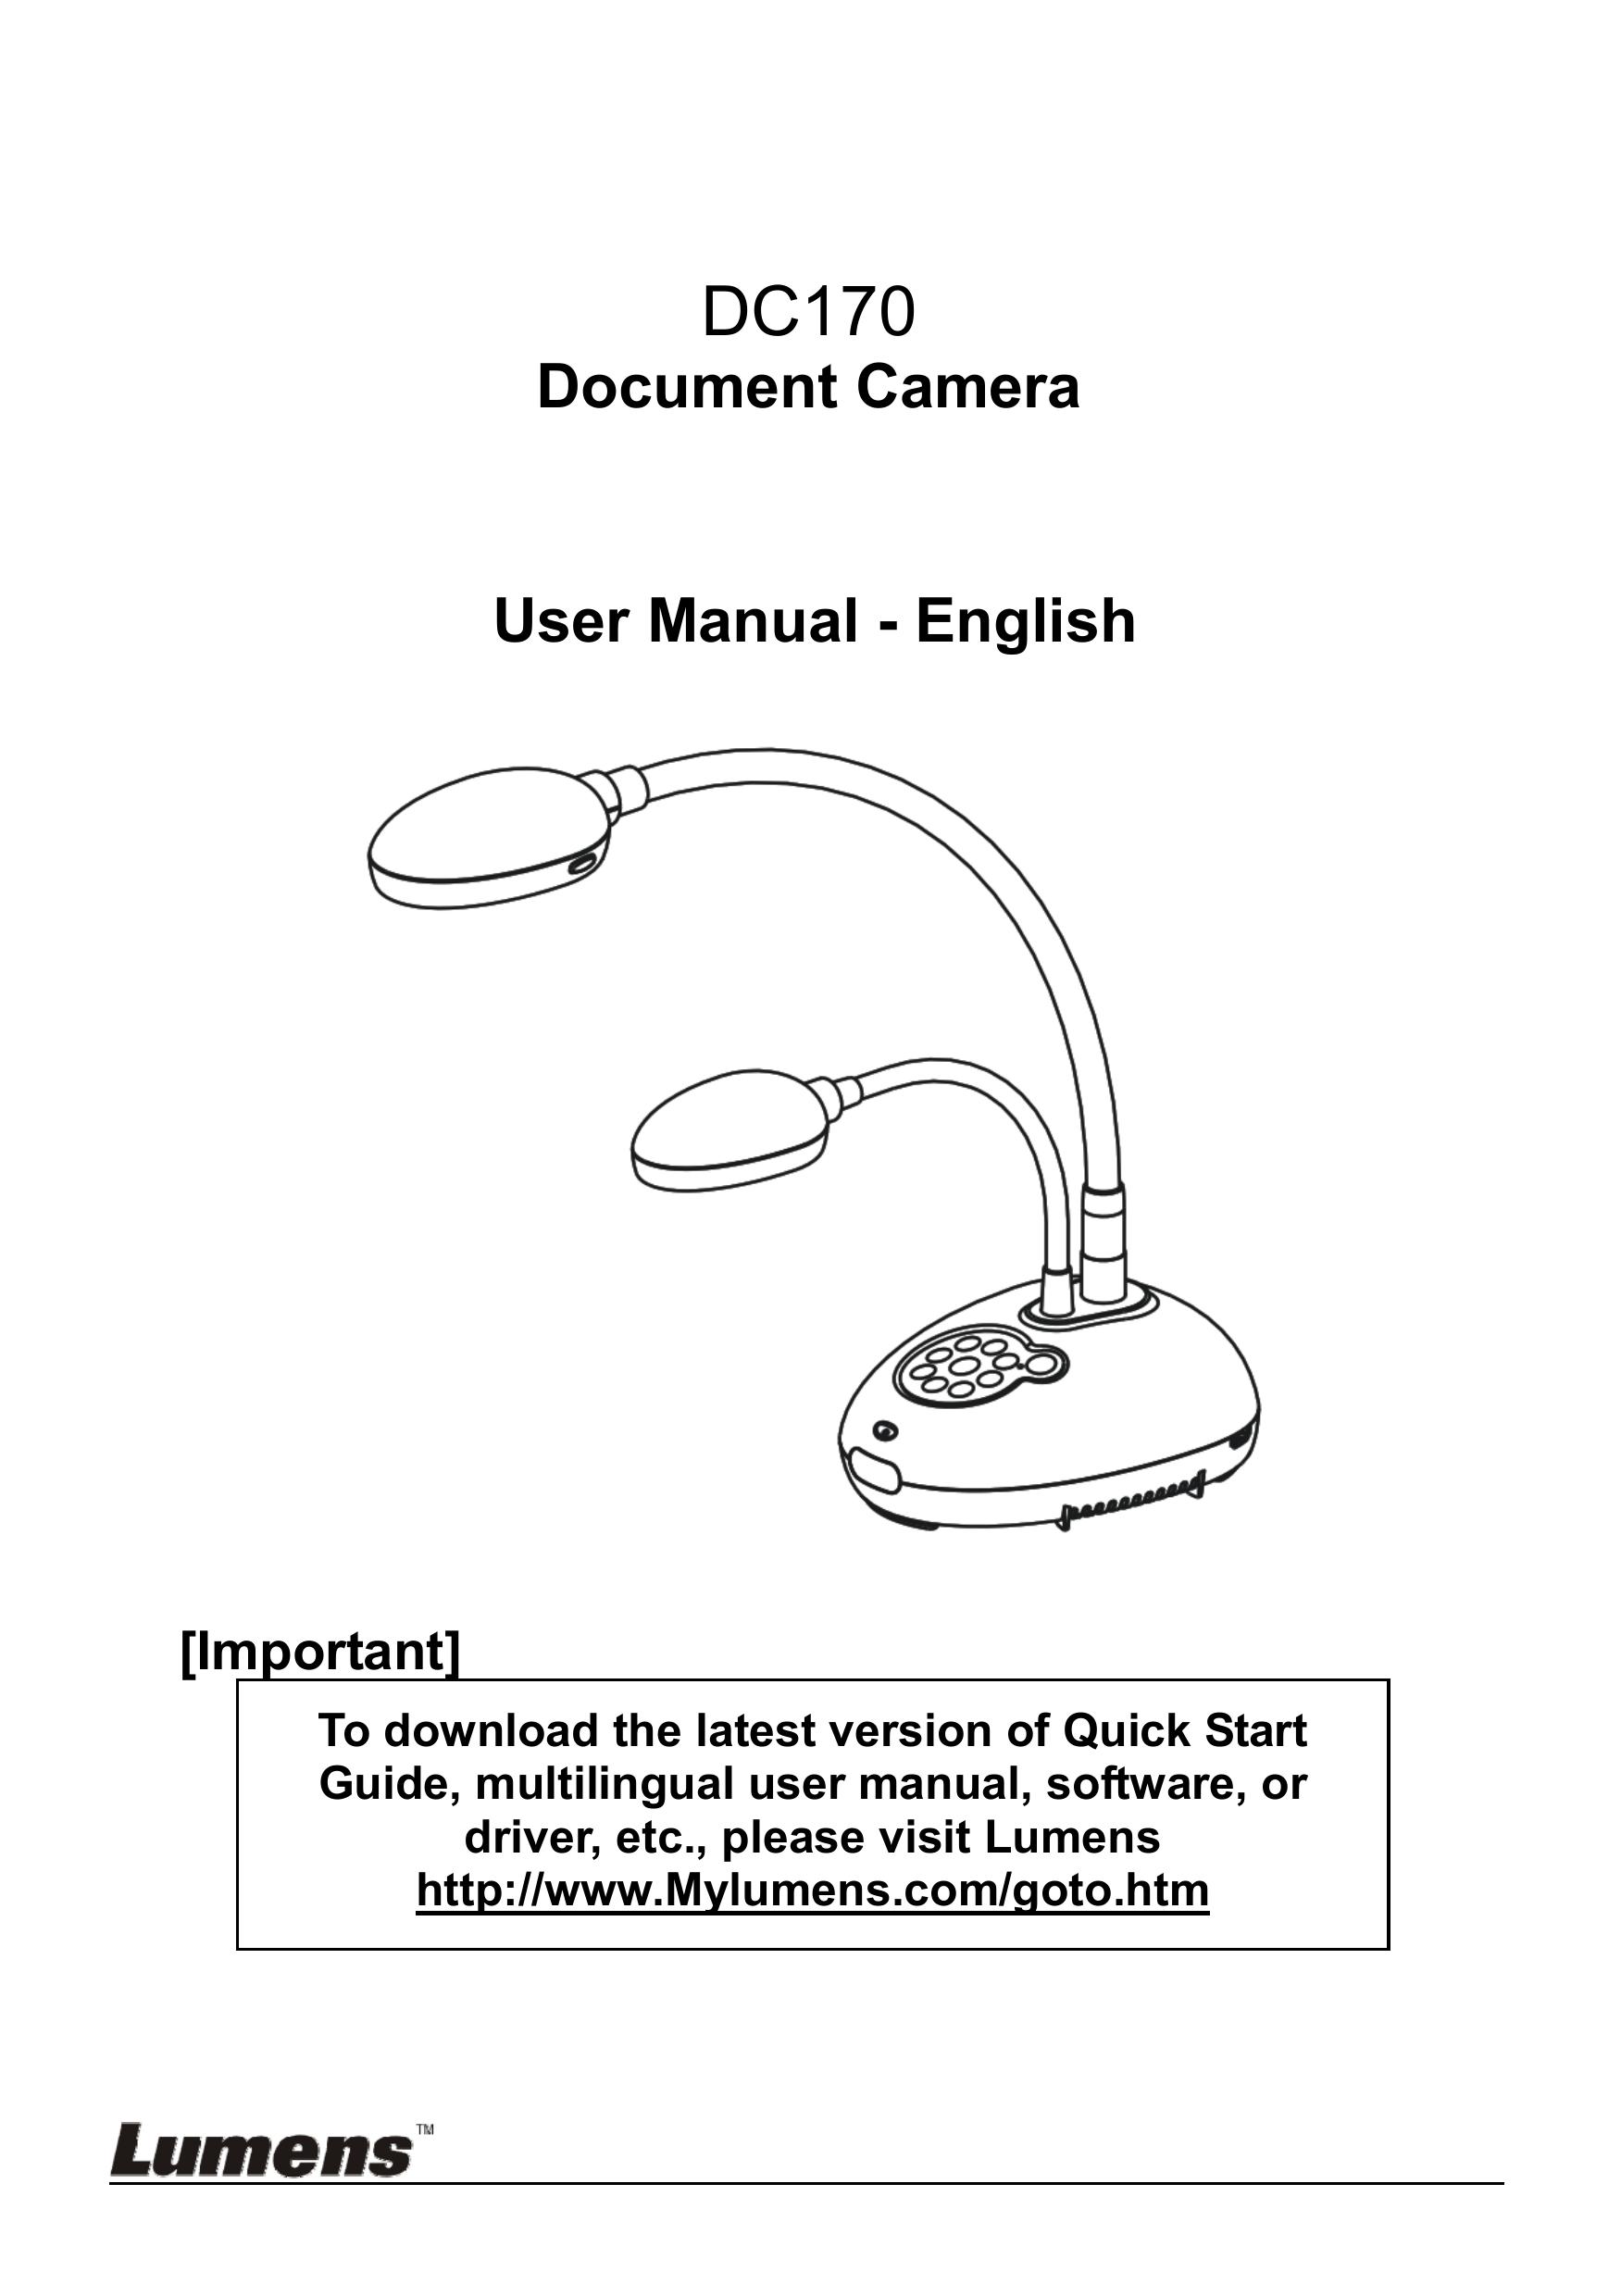 Lumens Technology DC170 Digital Camera User Manual